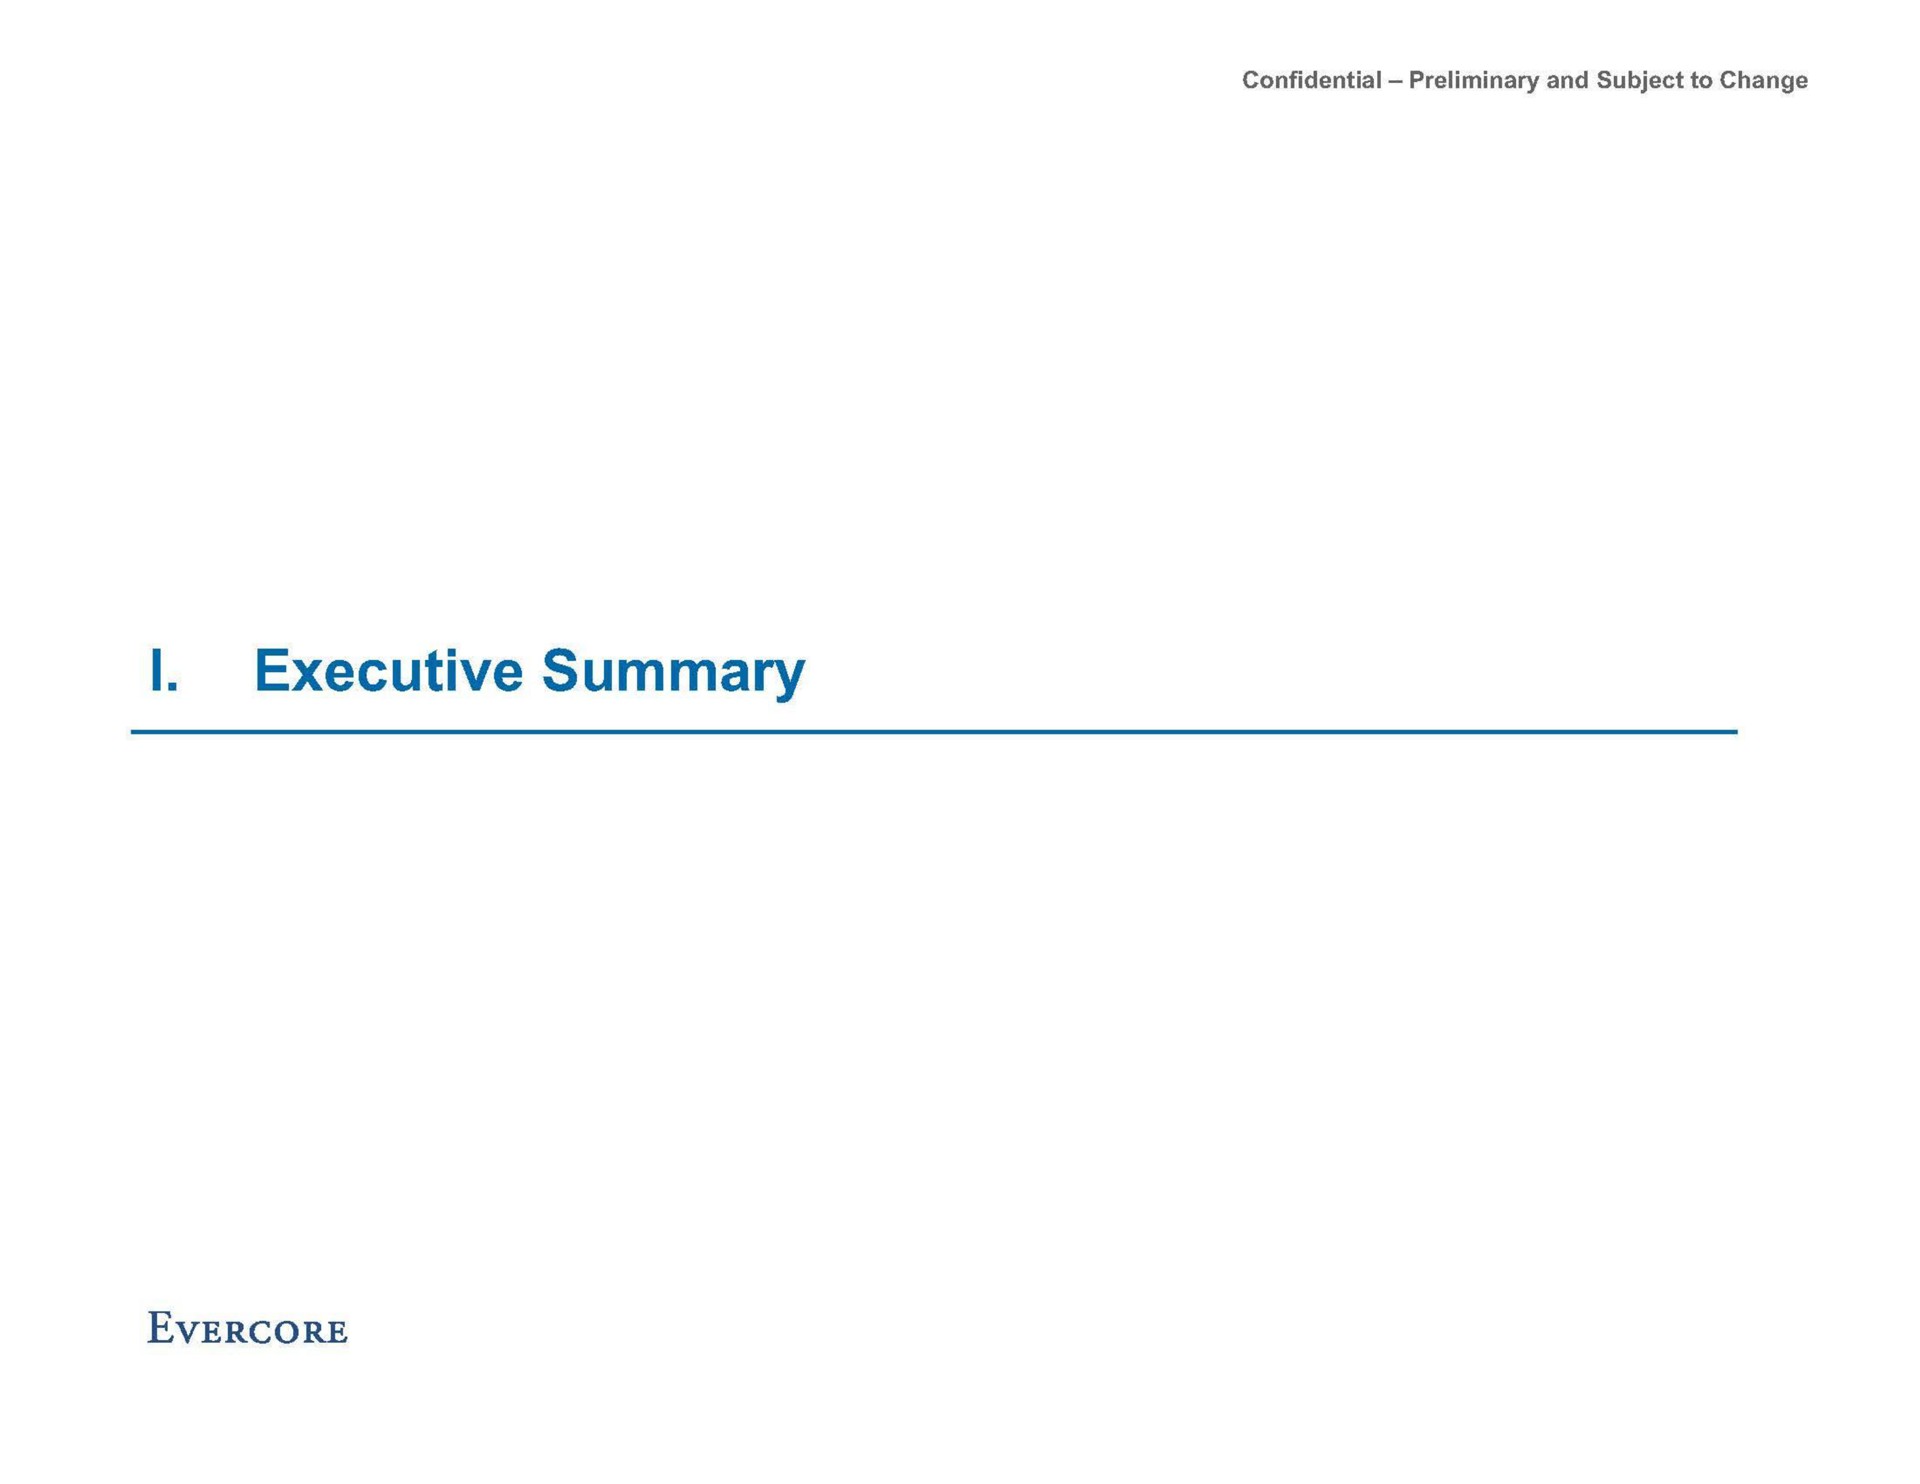 executive summary | Evercore